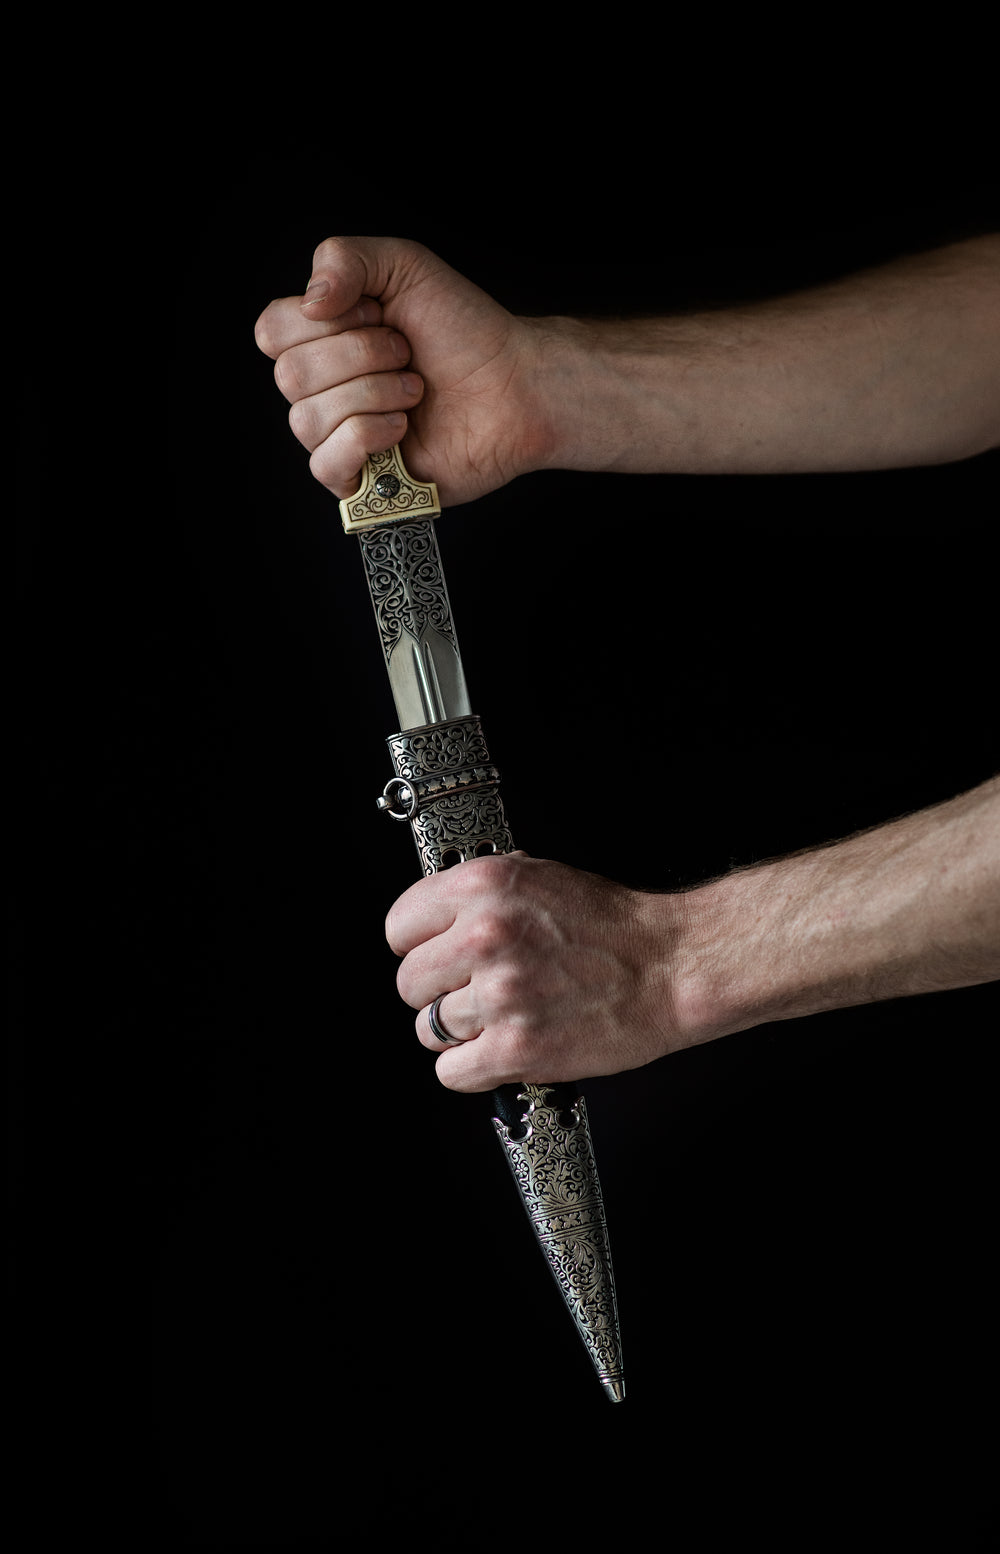 a hand draws an ornate dagger from its sheath